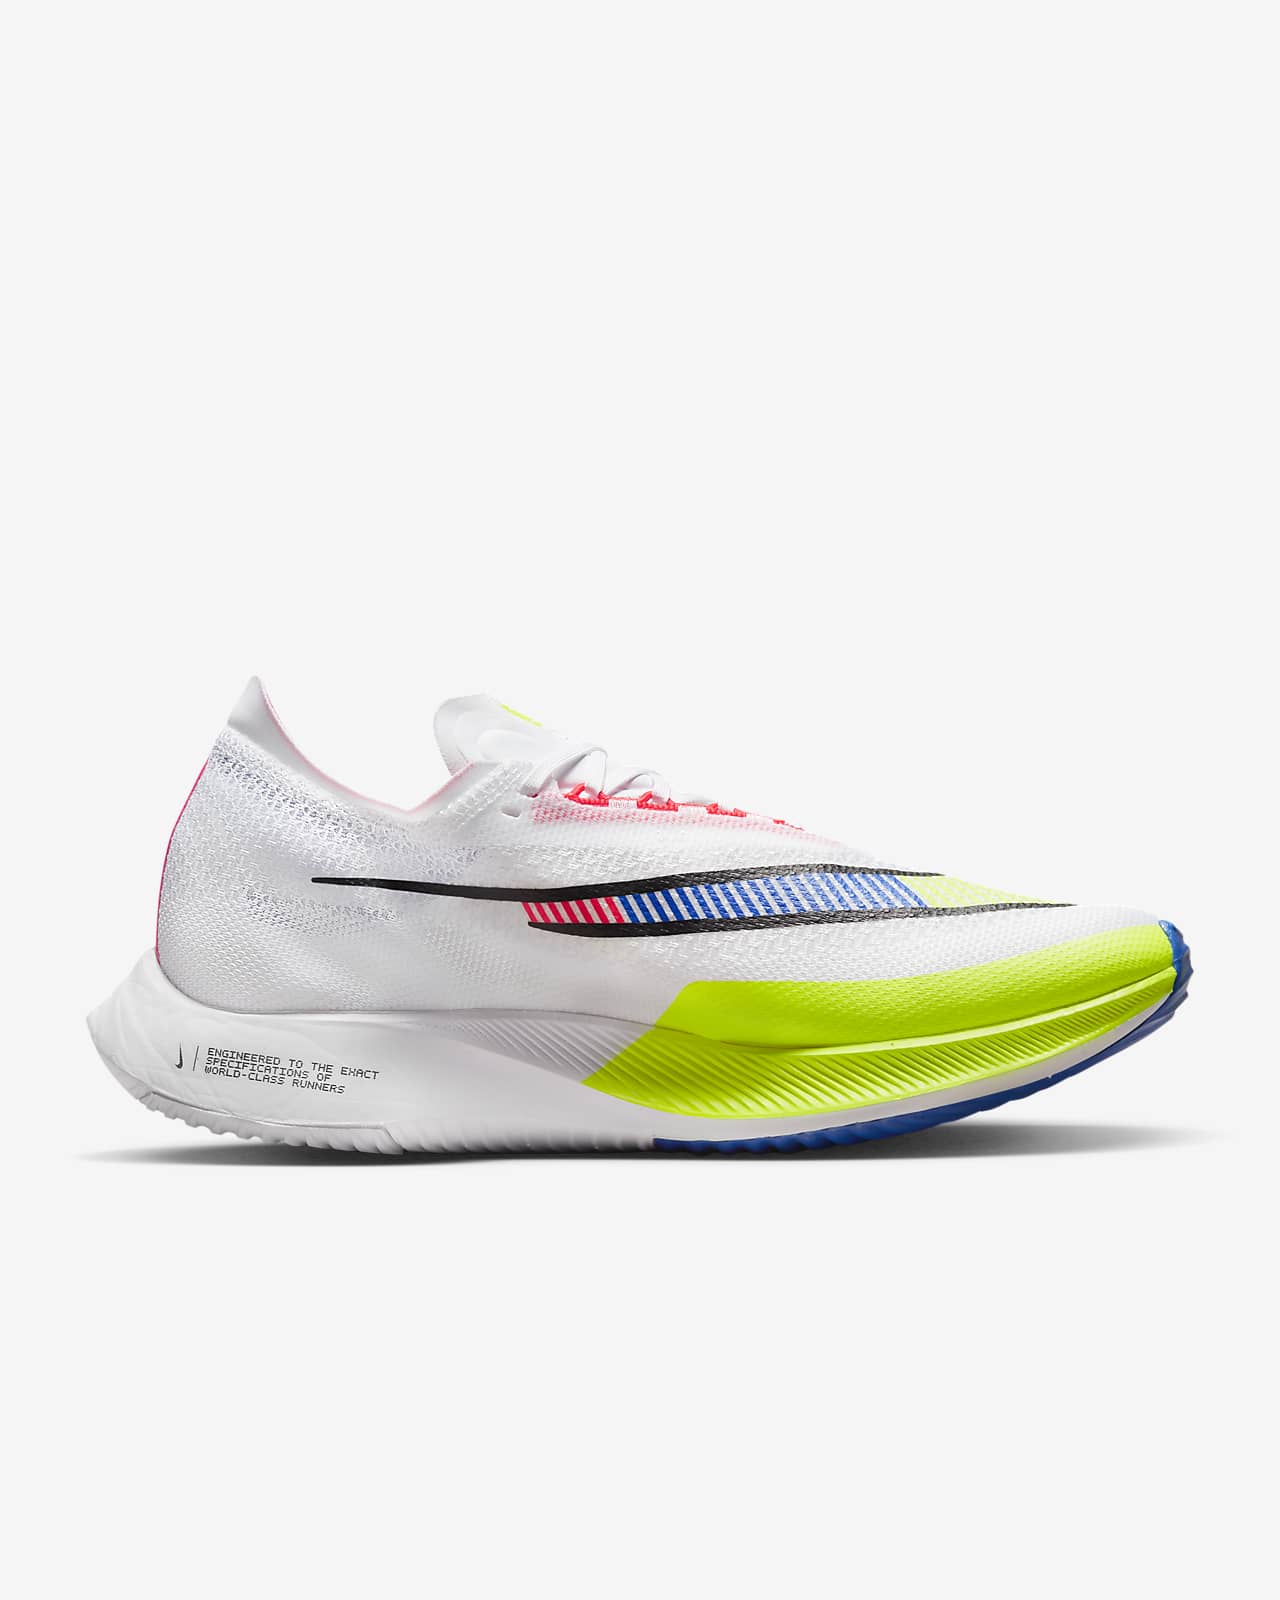 Nike Premium Road Racing Shoes. ID